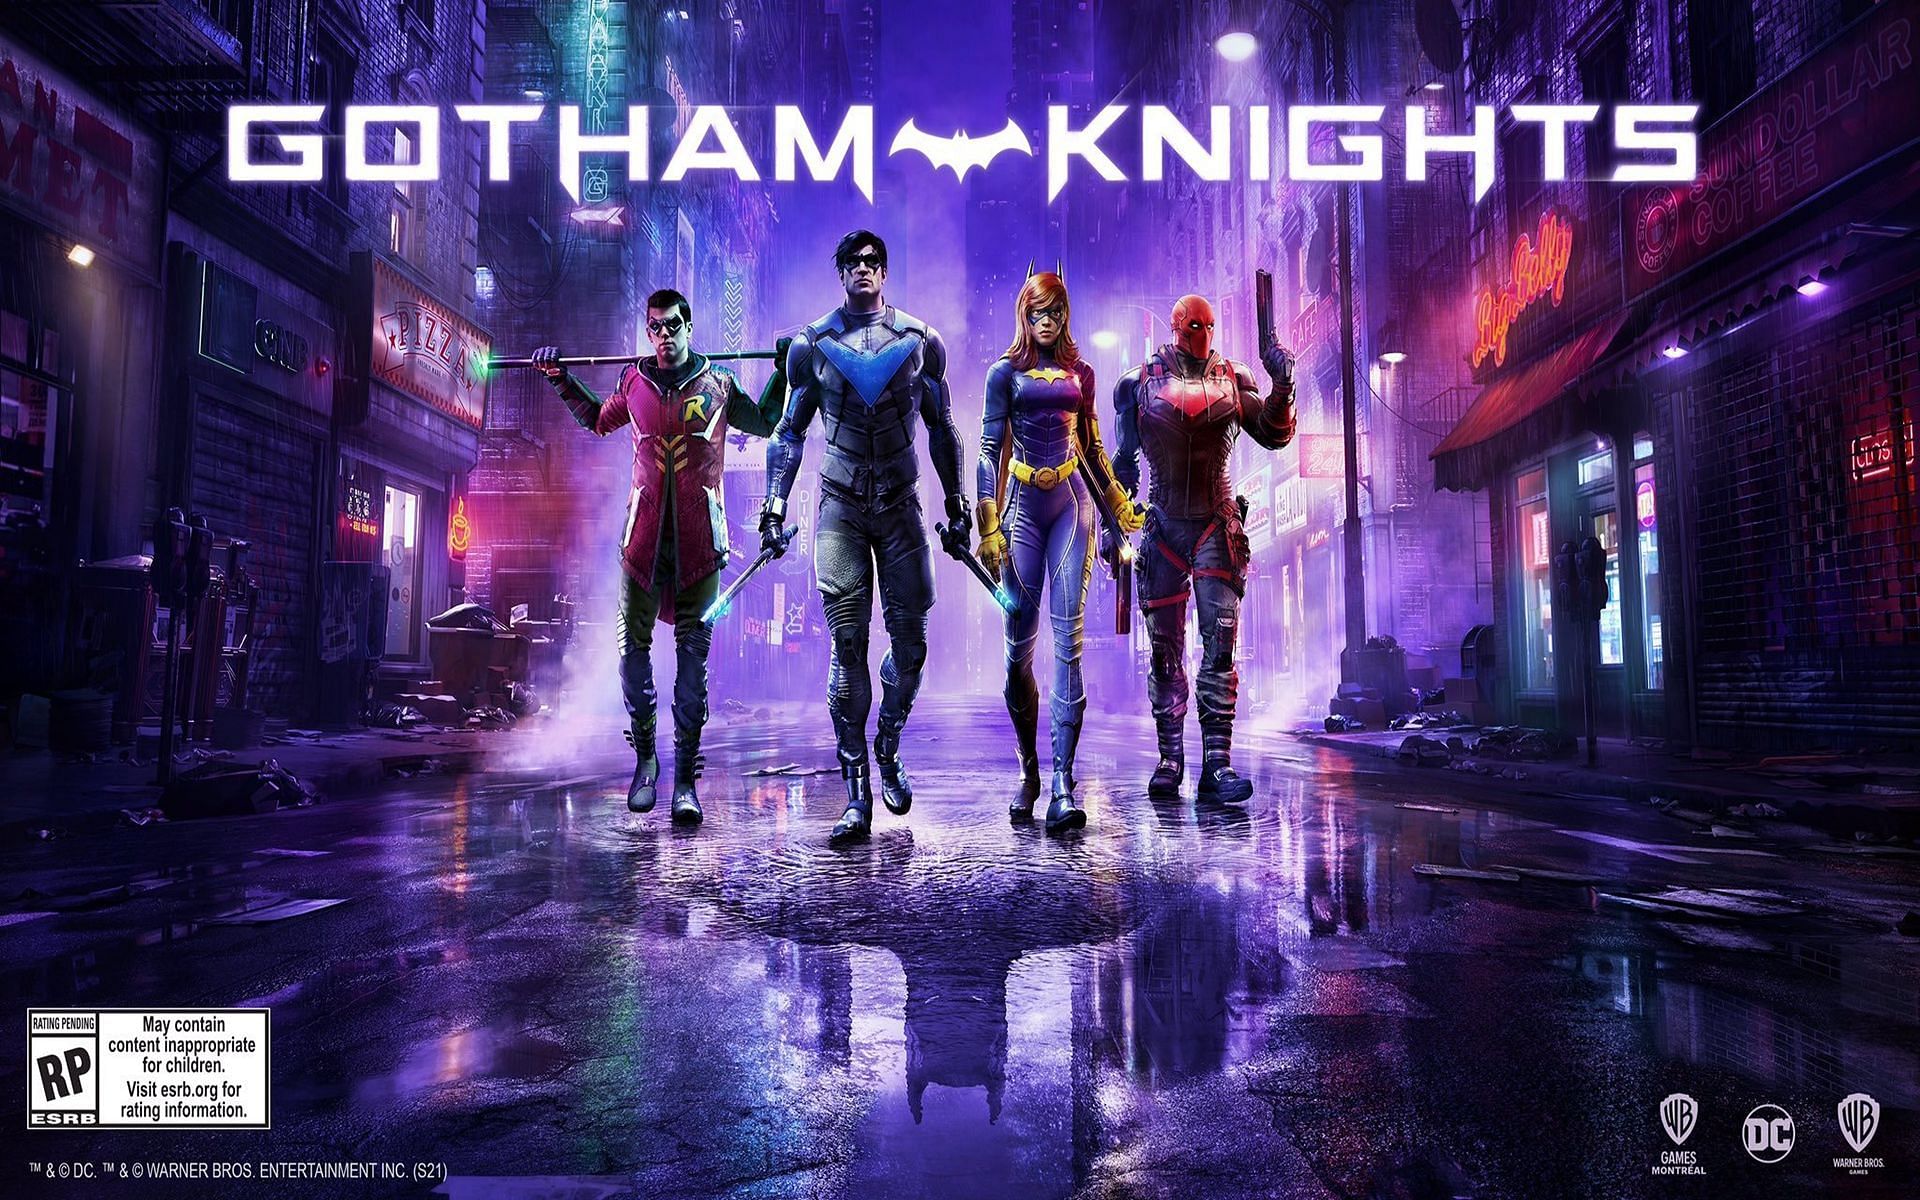 All four Gotham Knights (Image by Warner Bros)